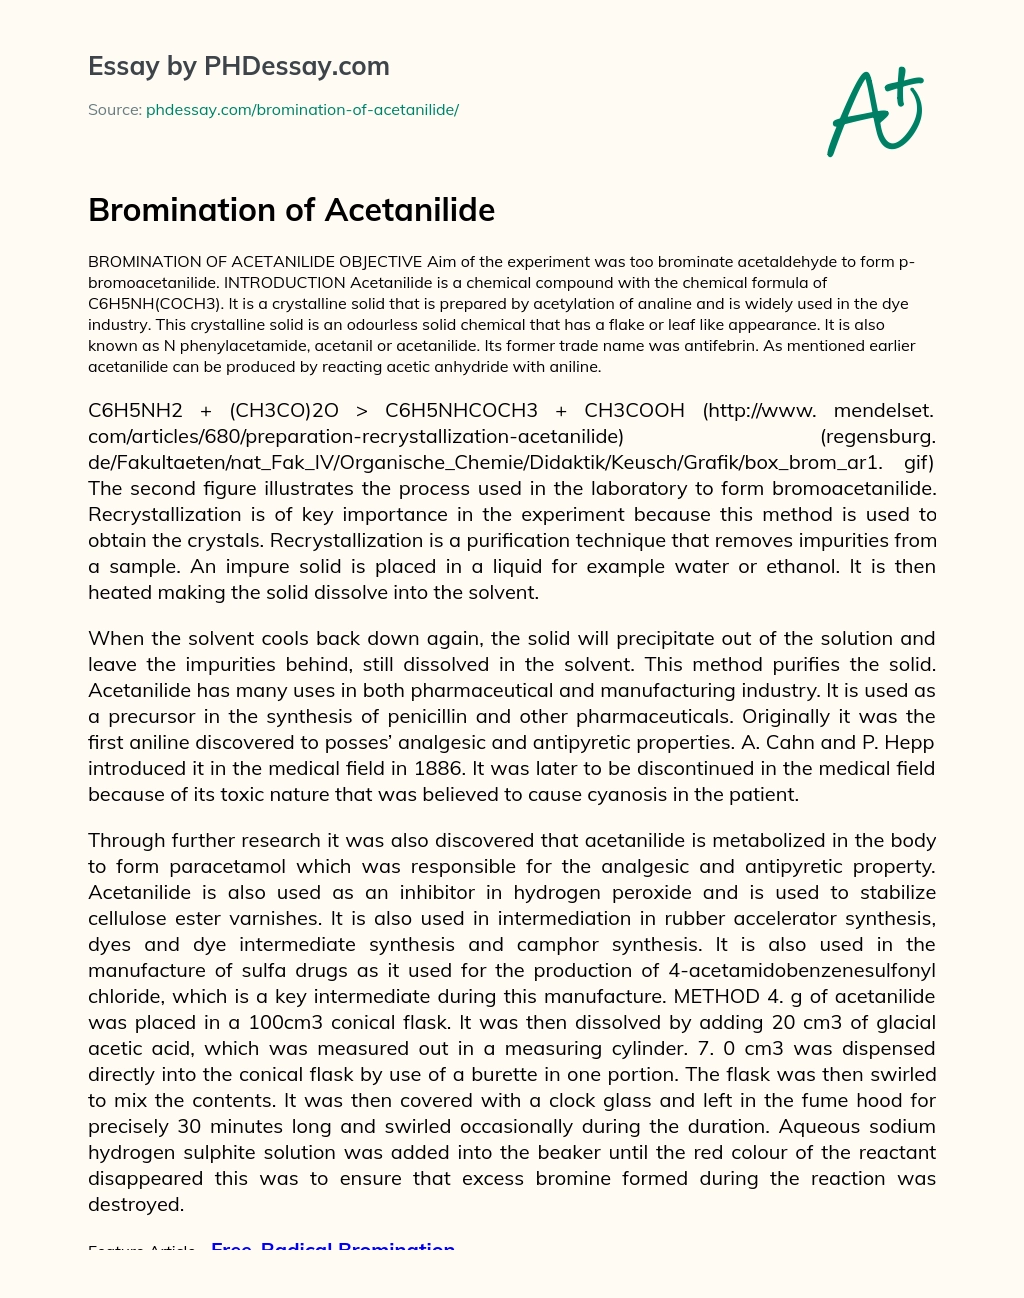 Bromination of Acetanilide essay